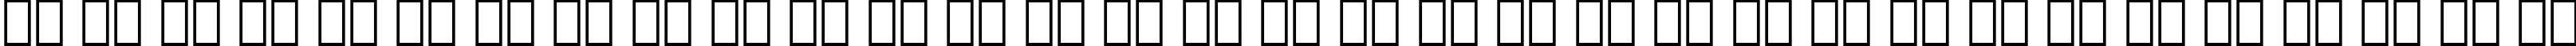 Пример написания русского алфавита шрифтом Calligraphic 810 Italic BT